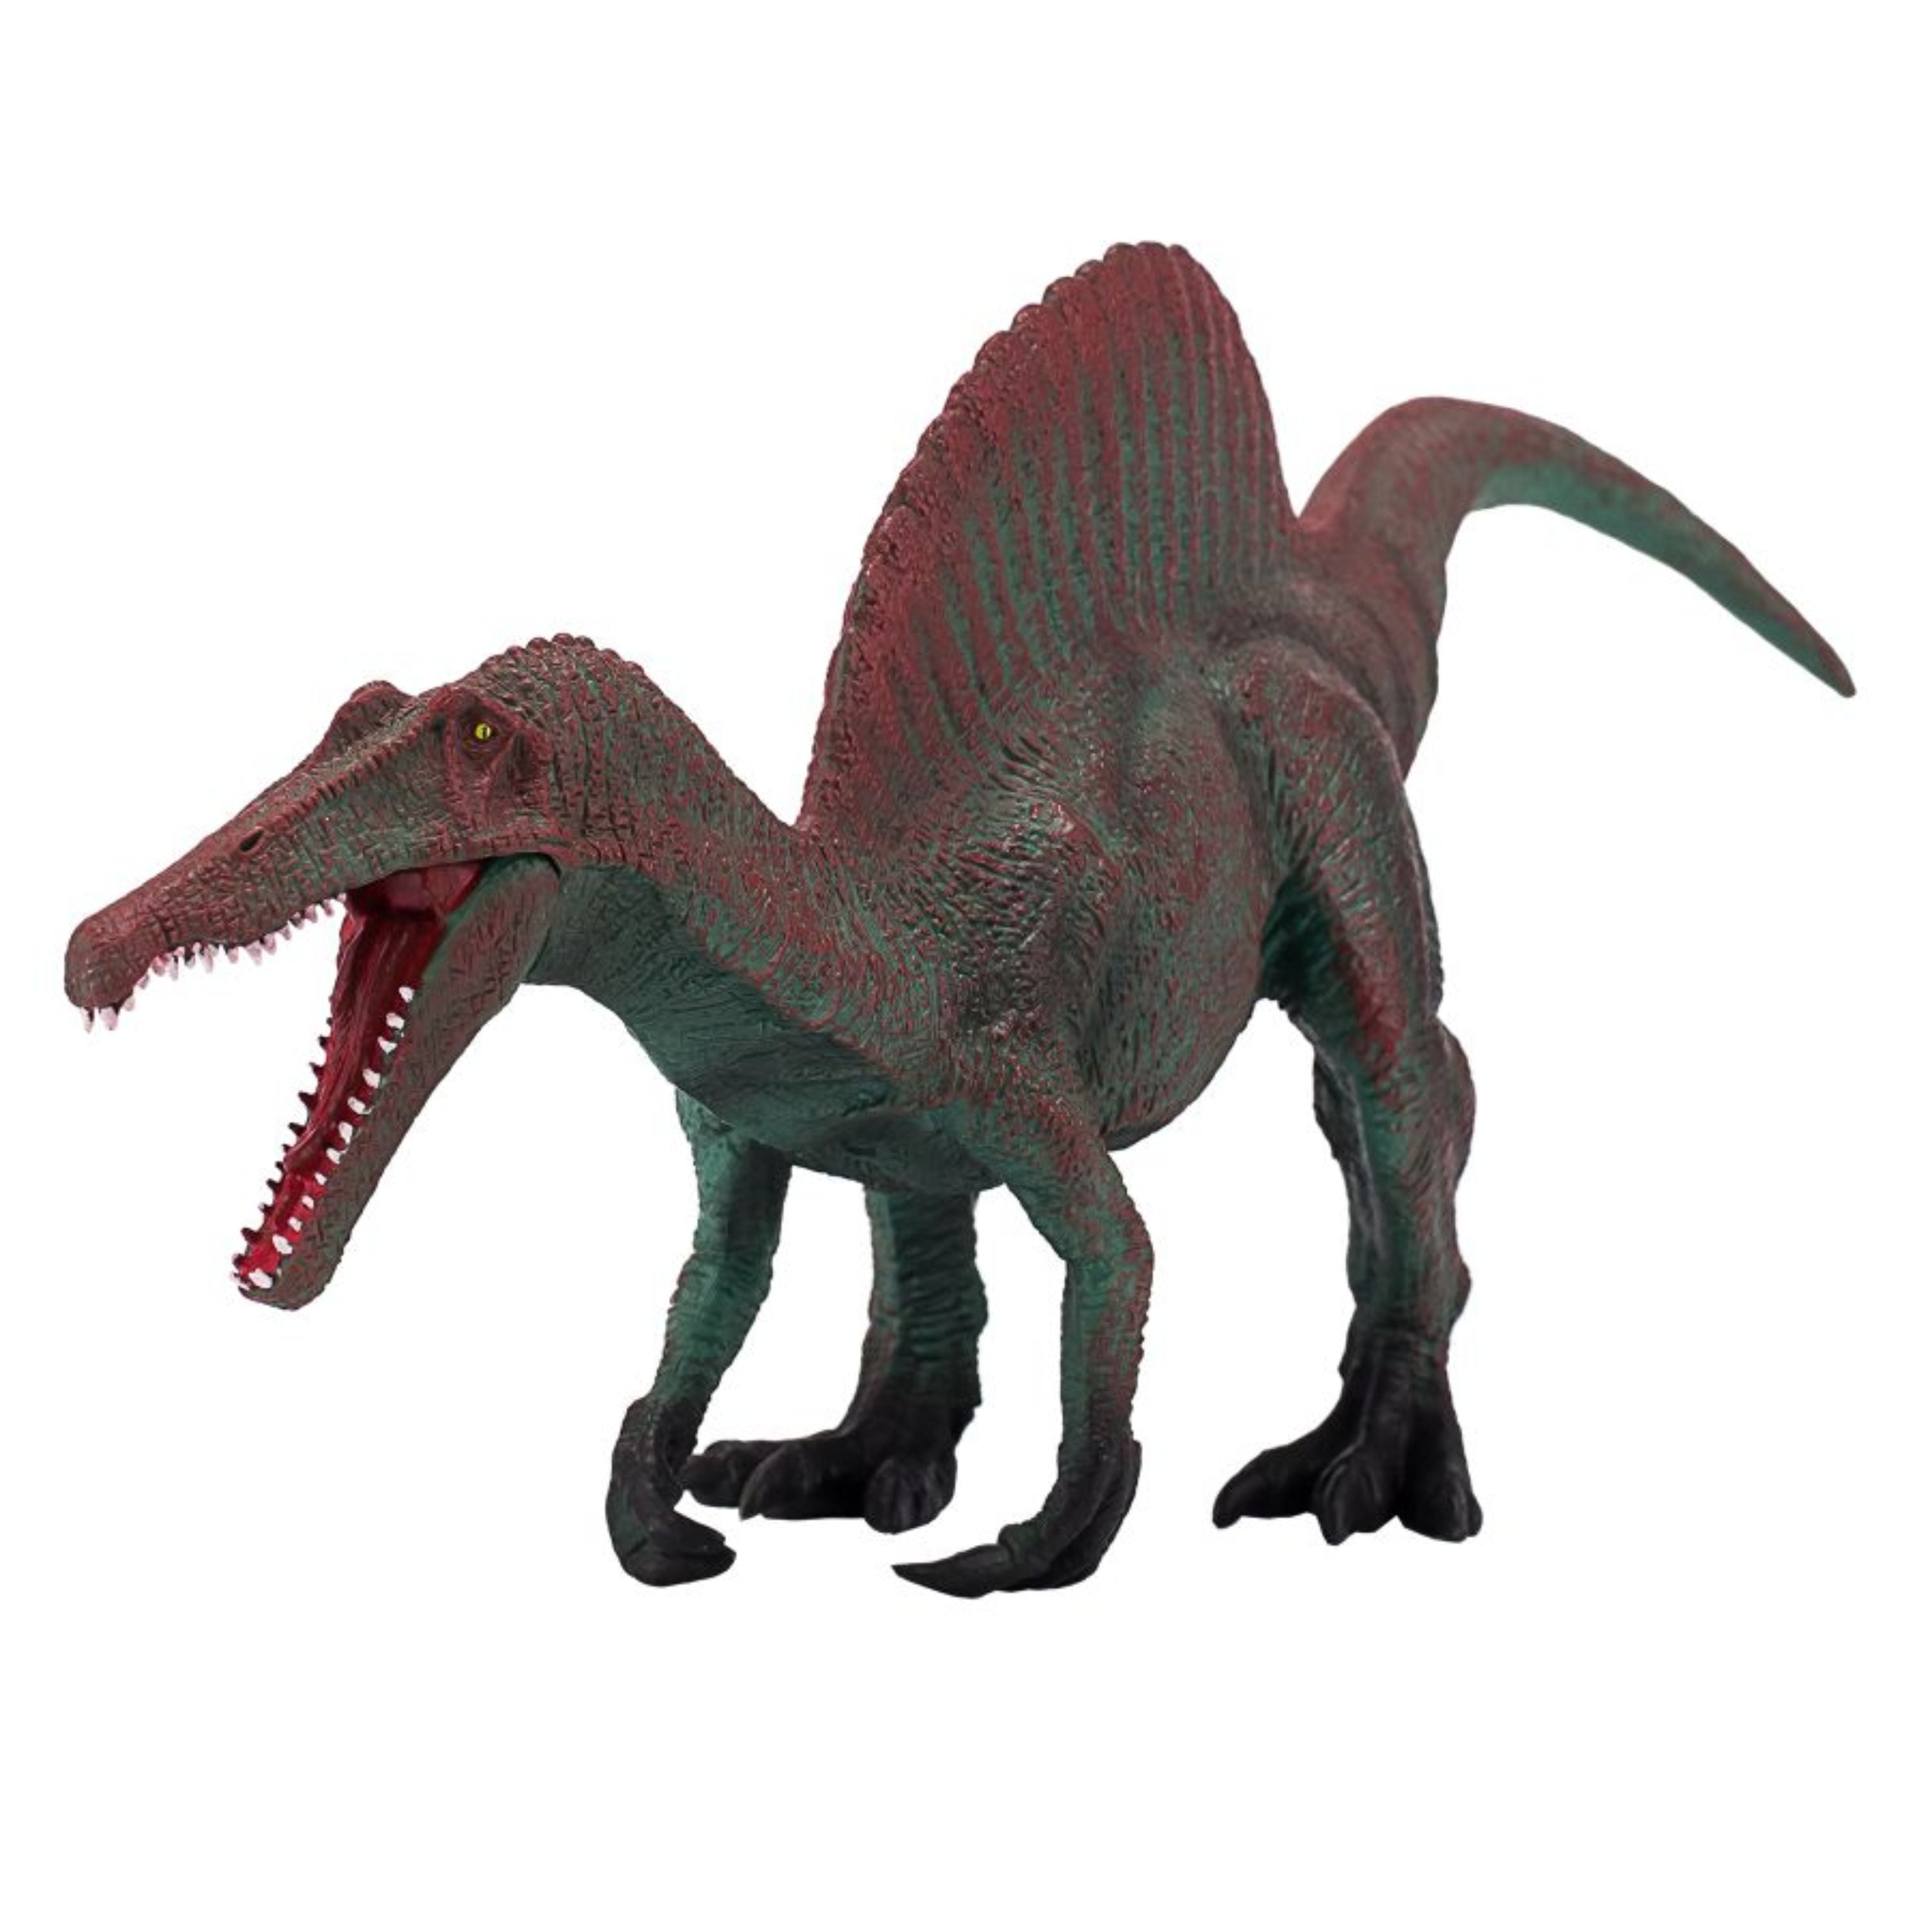 Mojo TROODON MOVING JAW DINOSAUR model figure toy Jurassic prehistoric figurine 